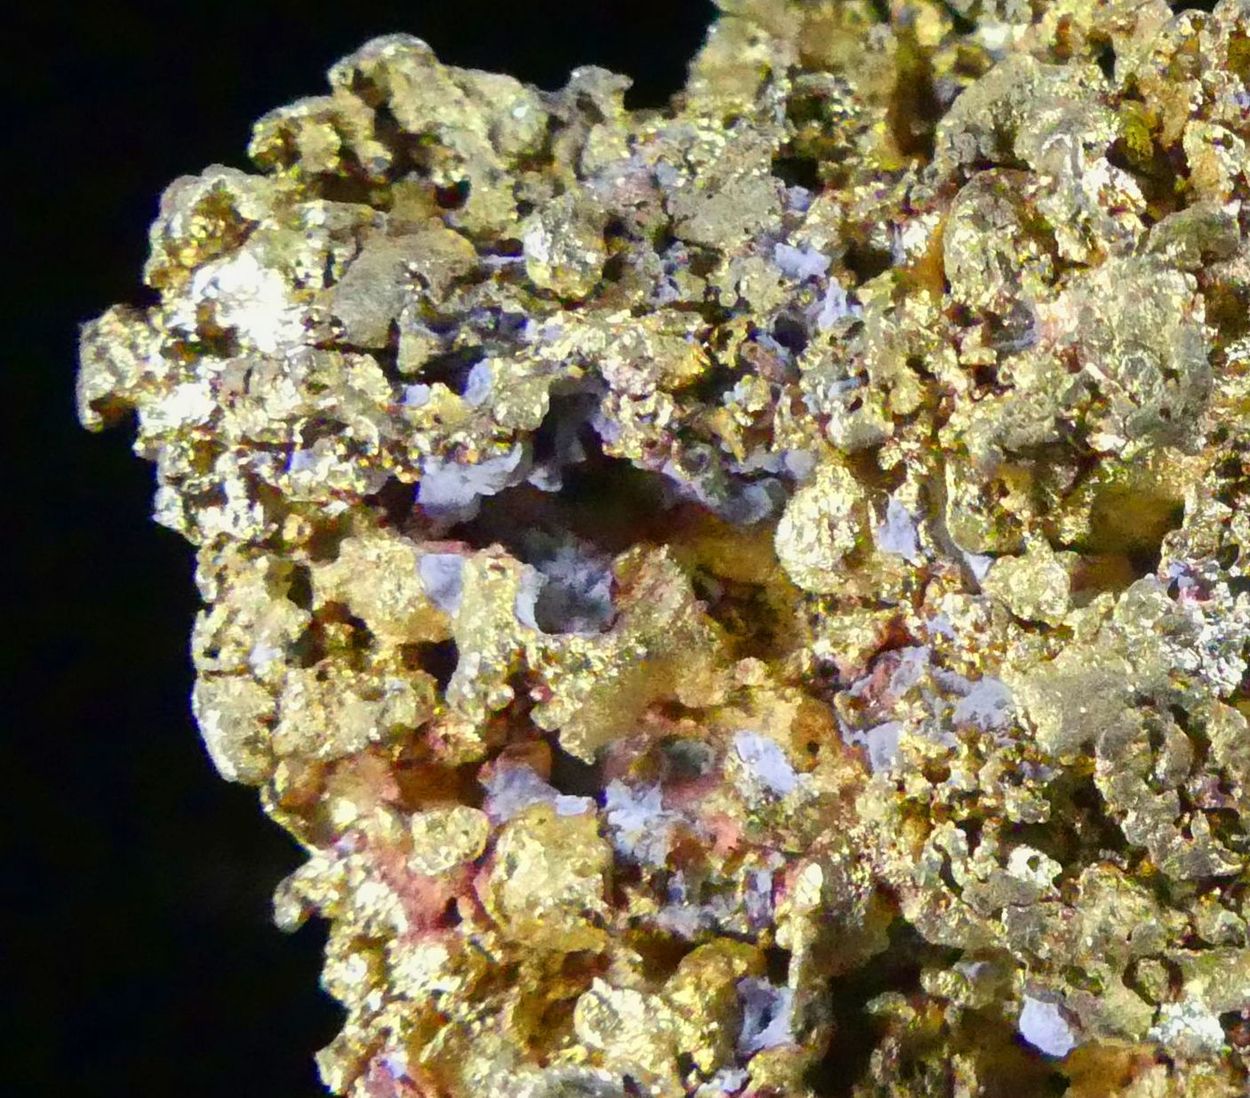 Tongxinite On Native Copper